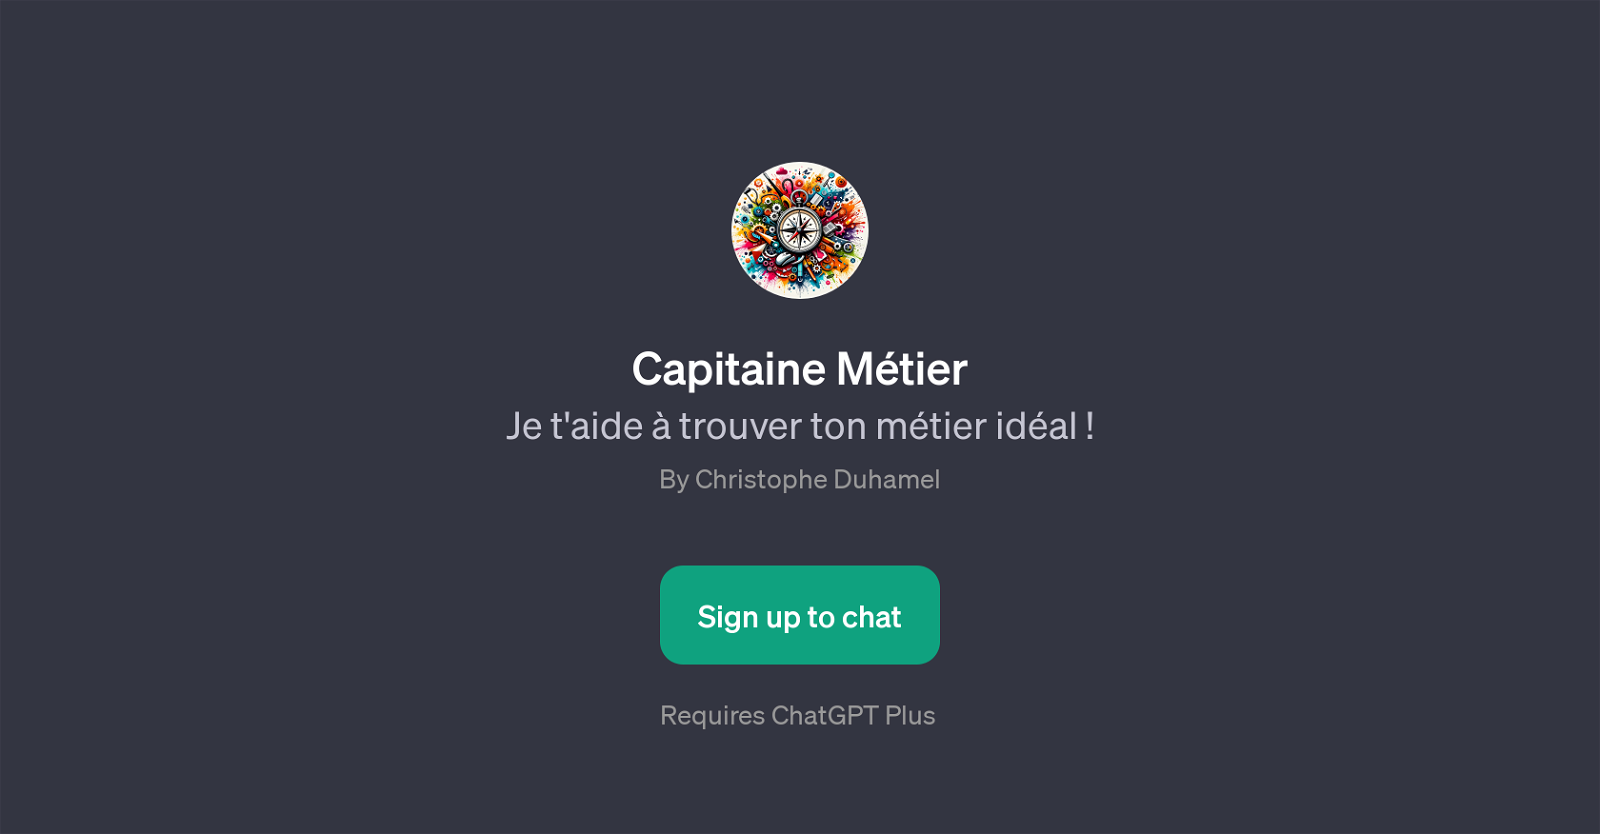 Capitaine Mtier website